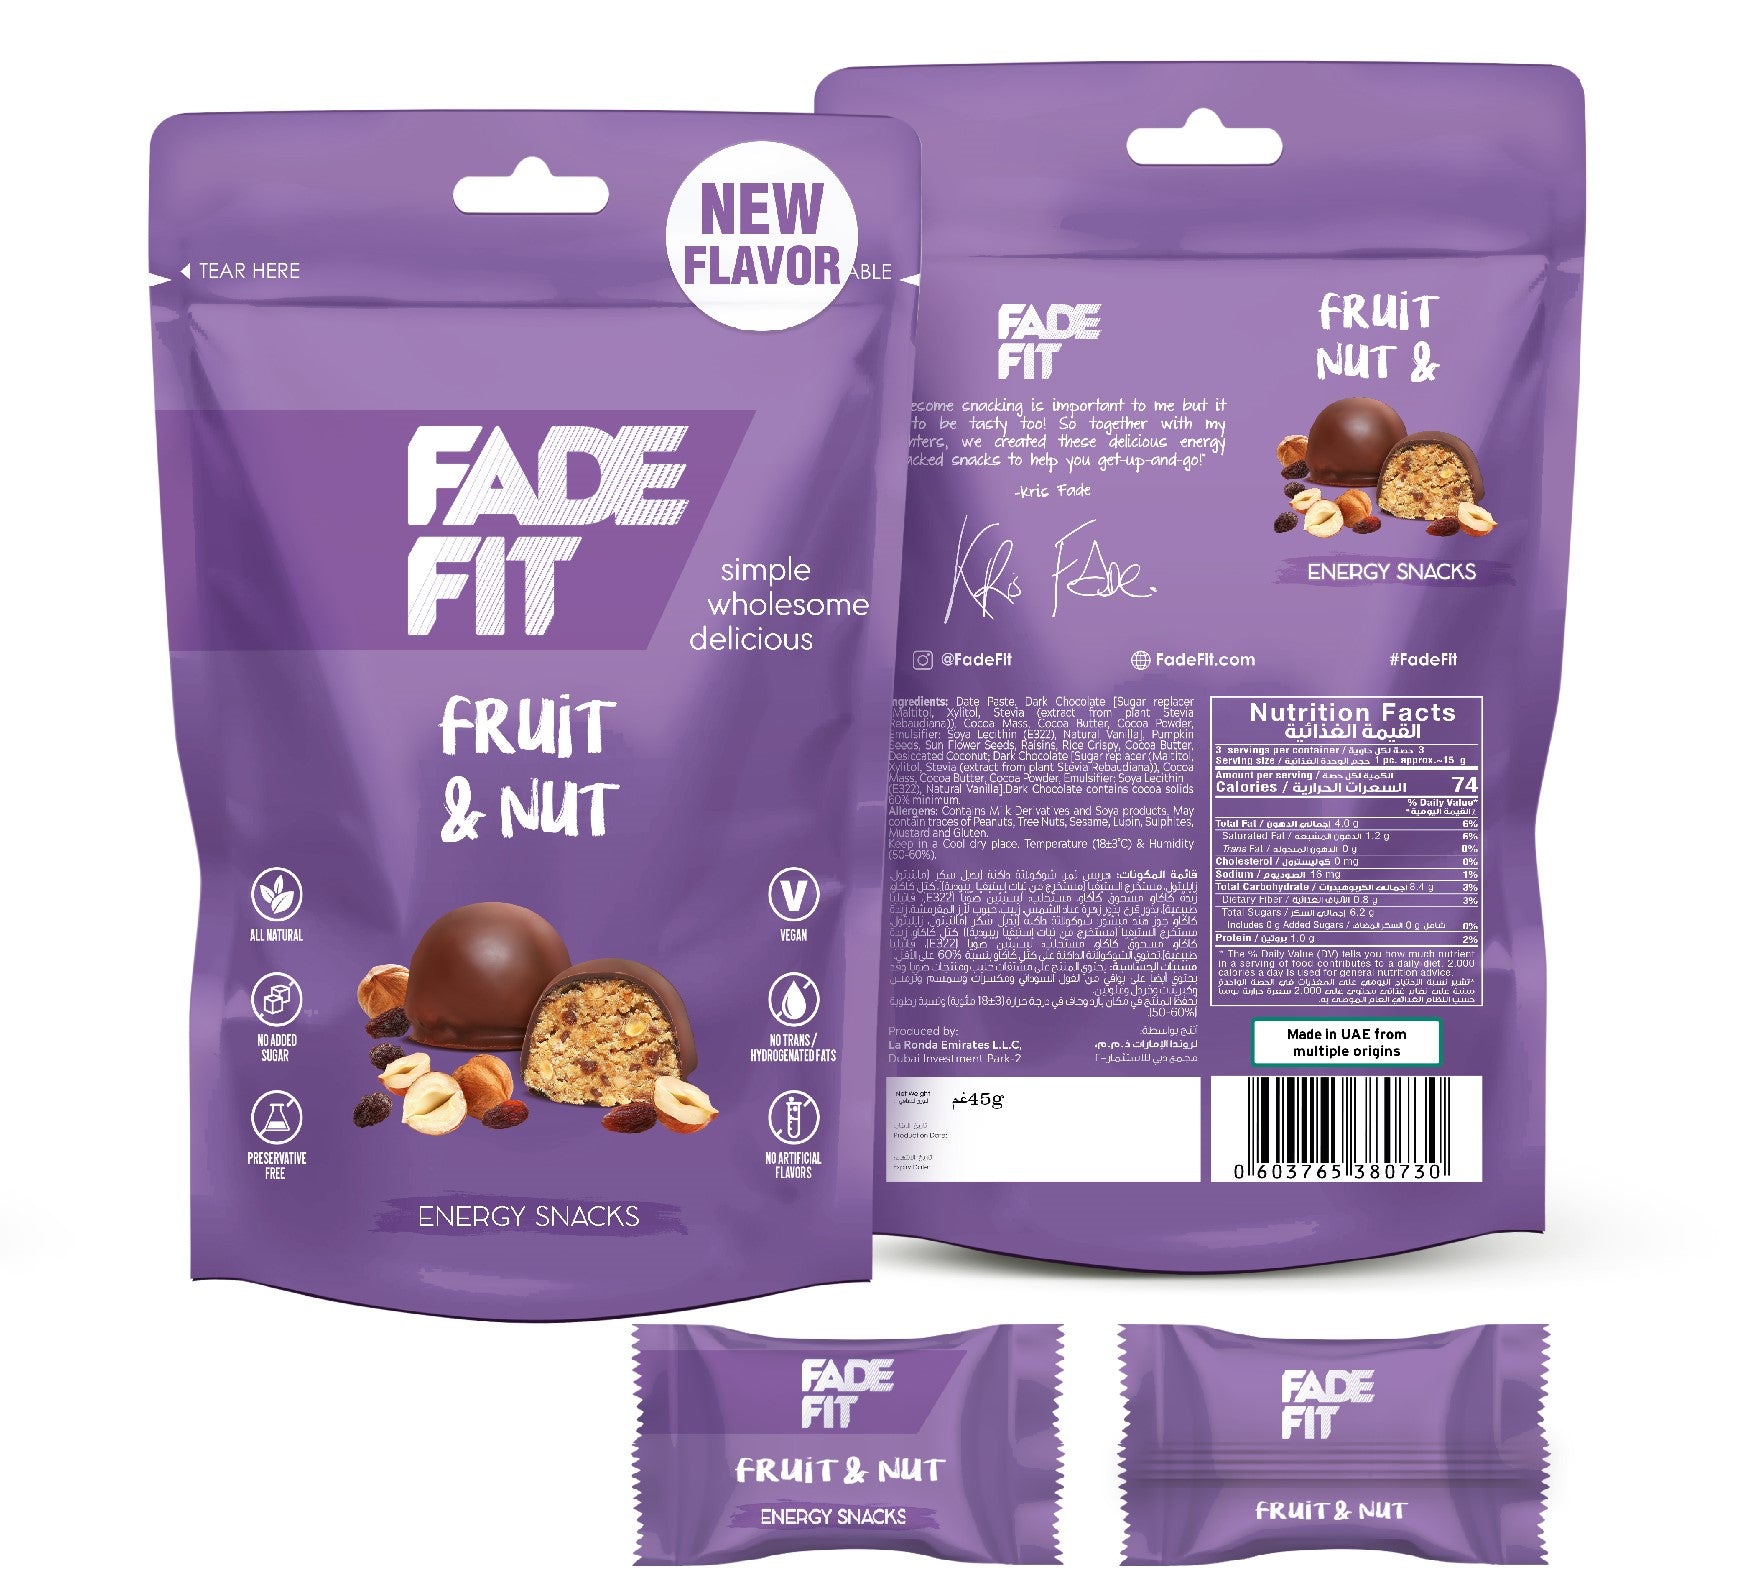 FADE FIT Fruit & Nut Energy Snack, 45g - Vegan, Sugar Free, Natural